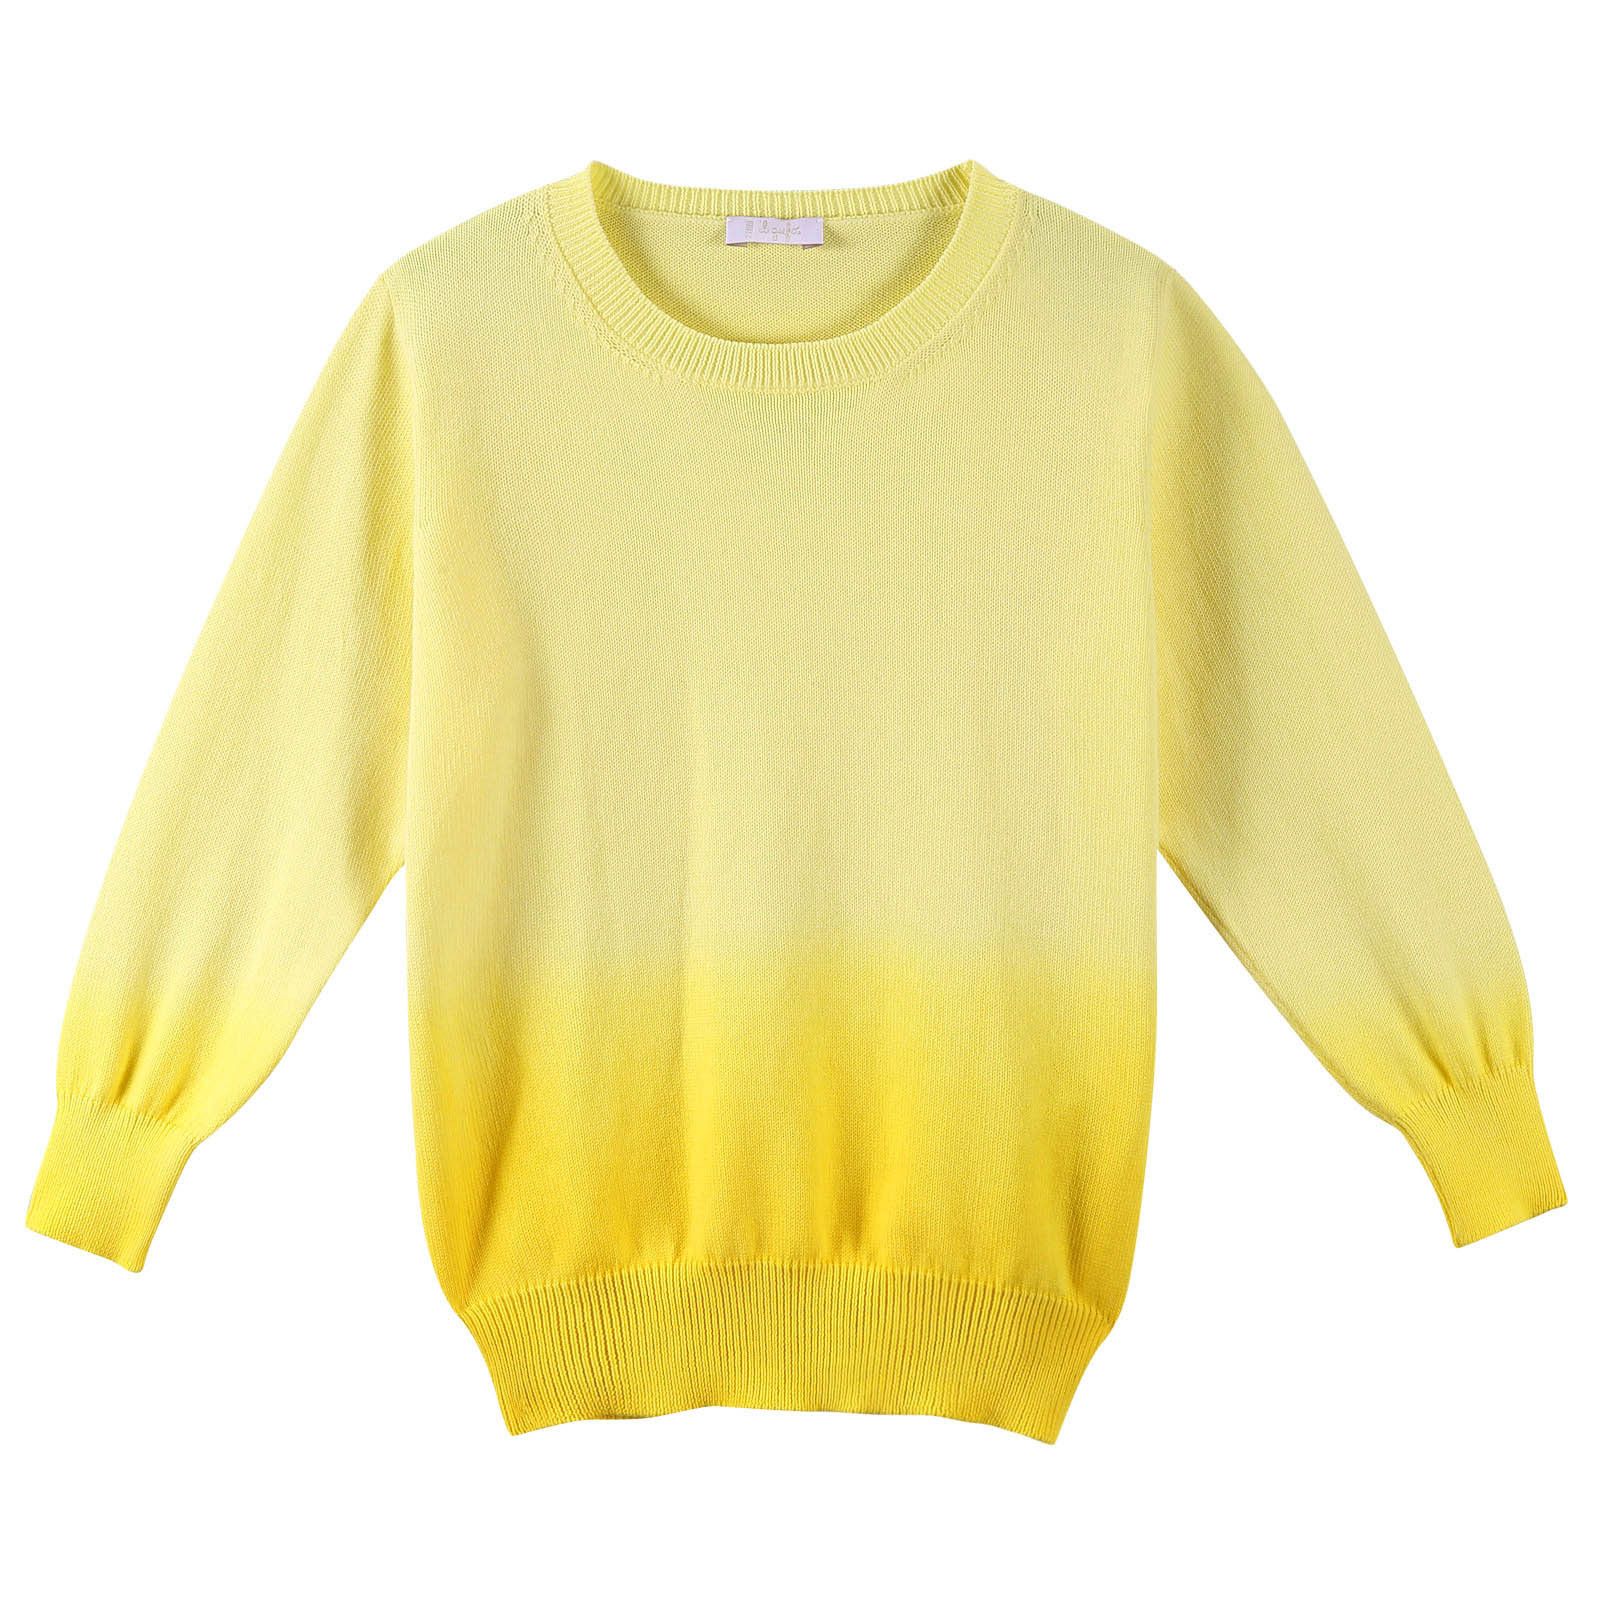 Boys Yellow Knitted Cotton Jersey Sweater - CÉMAROSE | Children's Fashion Store - 1